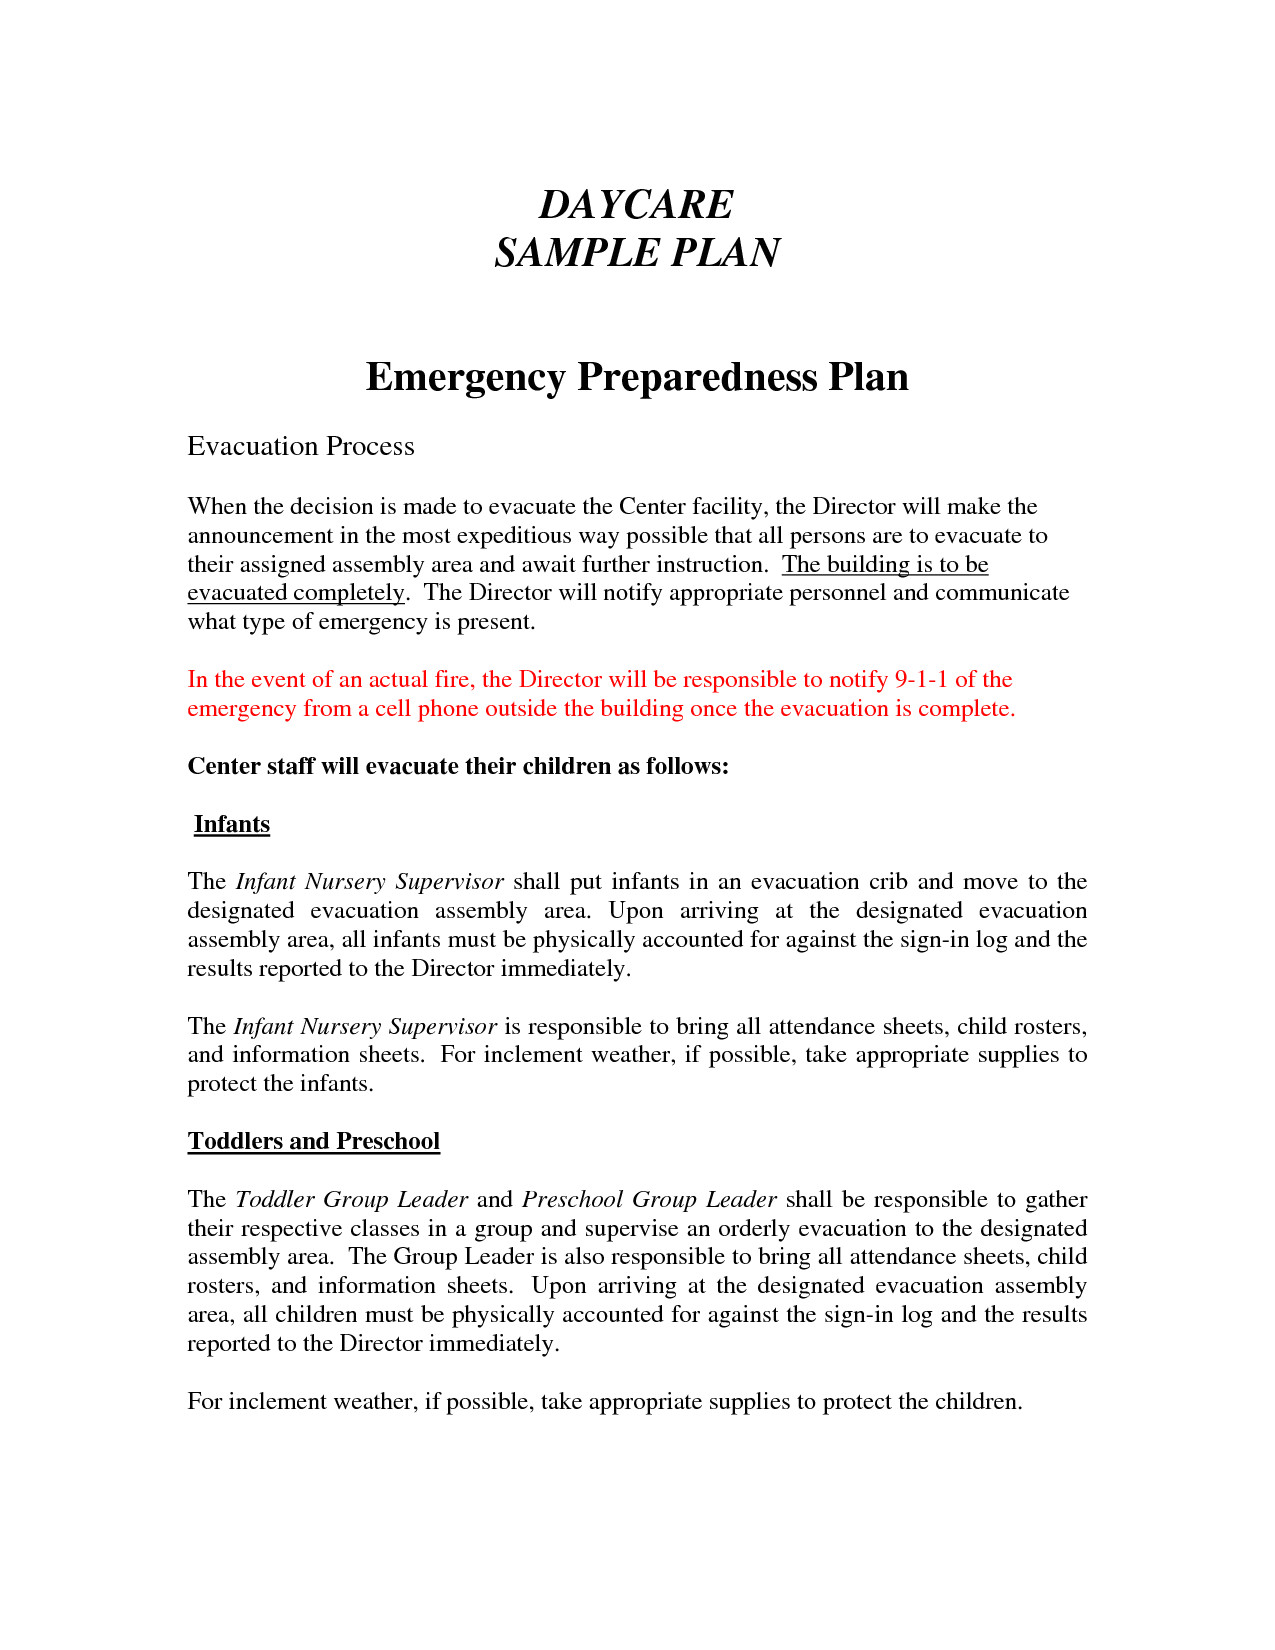 post emergency preparedness plan sample 295882